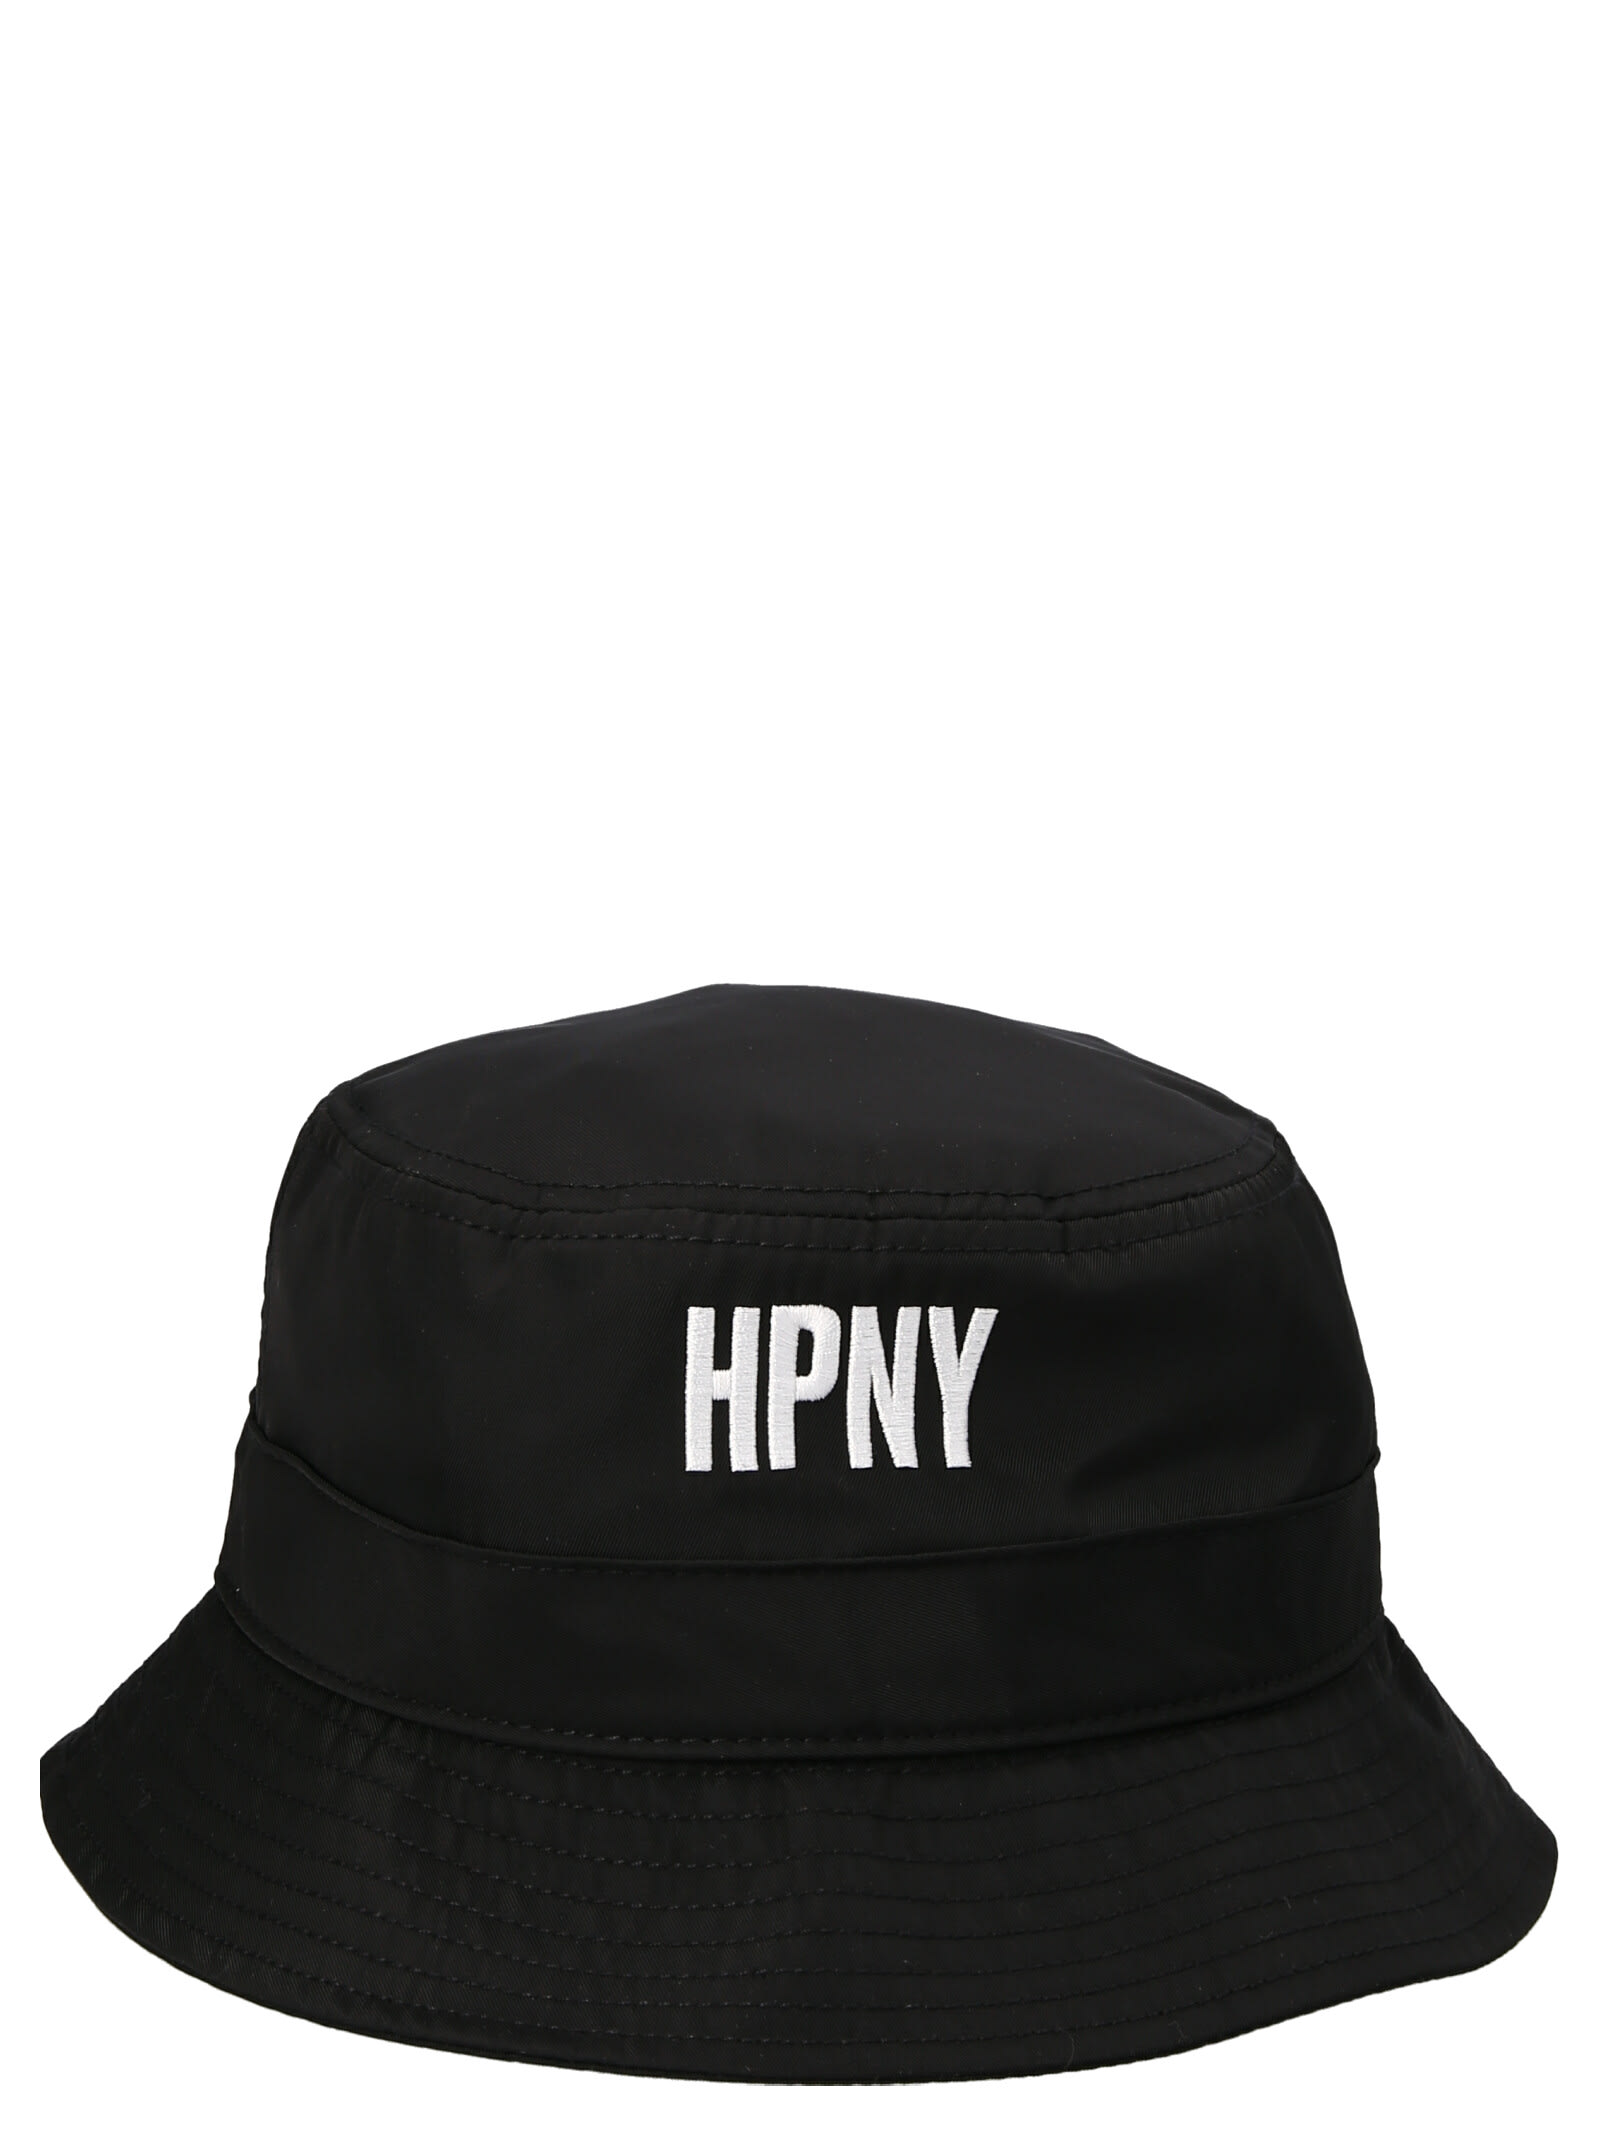 HERON PRESTON hpny Embroidery Bucket Hat